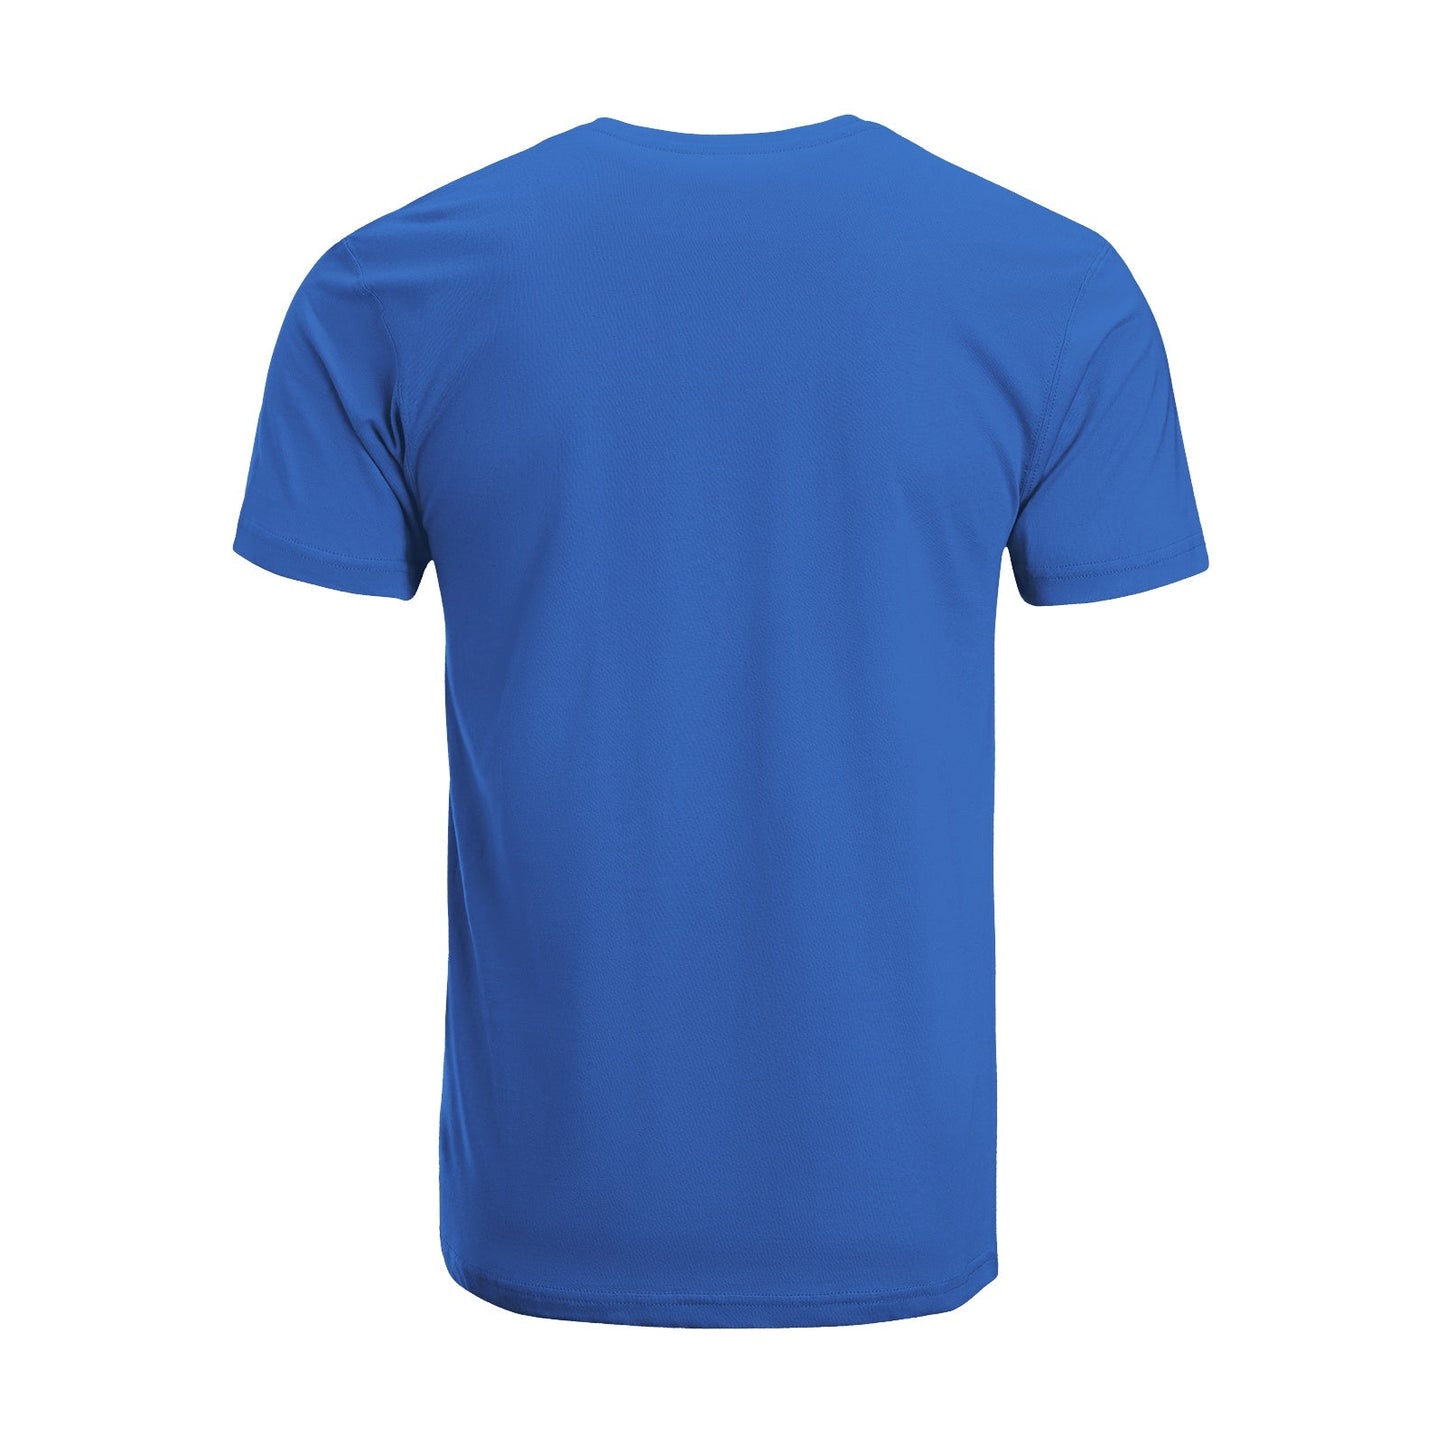 Unisex Short Sleeve Crew Neck Cotton Jersey T-Shirt MOM 19